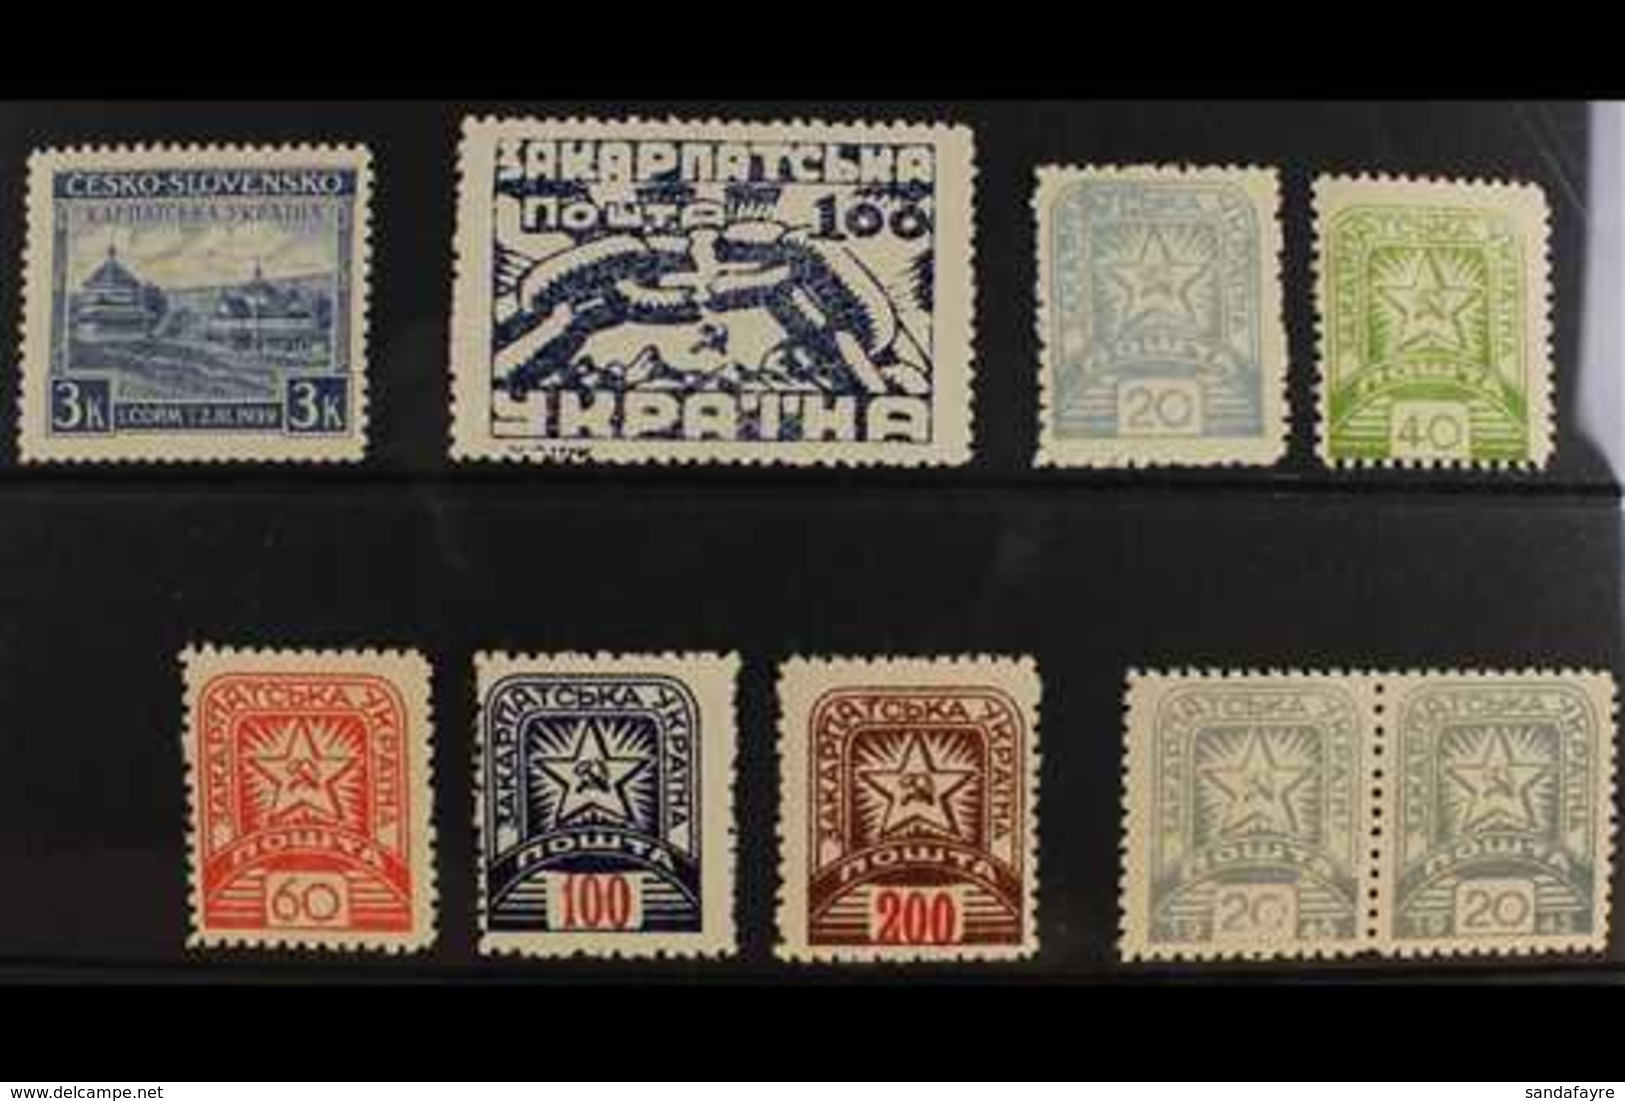 CARPATHO-UKRAINE 1939-1945 Fine Mint Local Stamps, Includes 1939 3k, 1945 (May) 100f, 1945 (June) Set (ex 10f) And 1945  - Ukraine